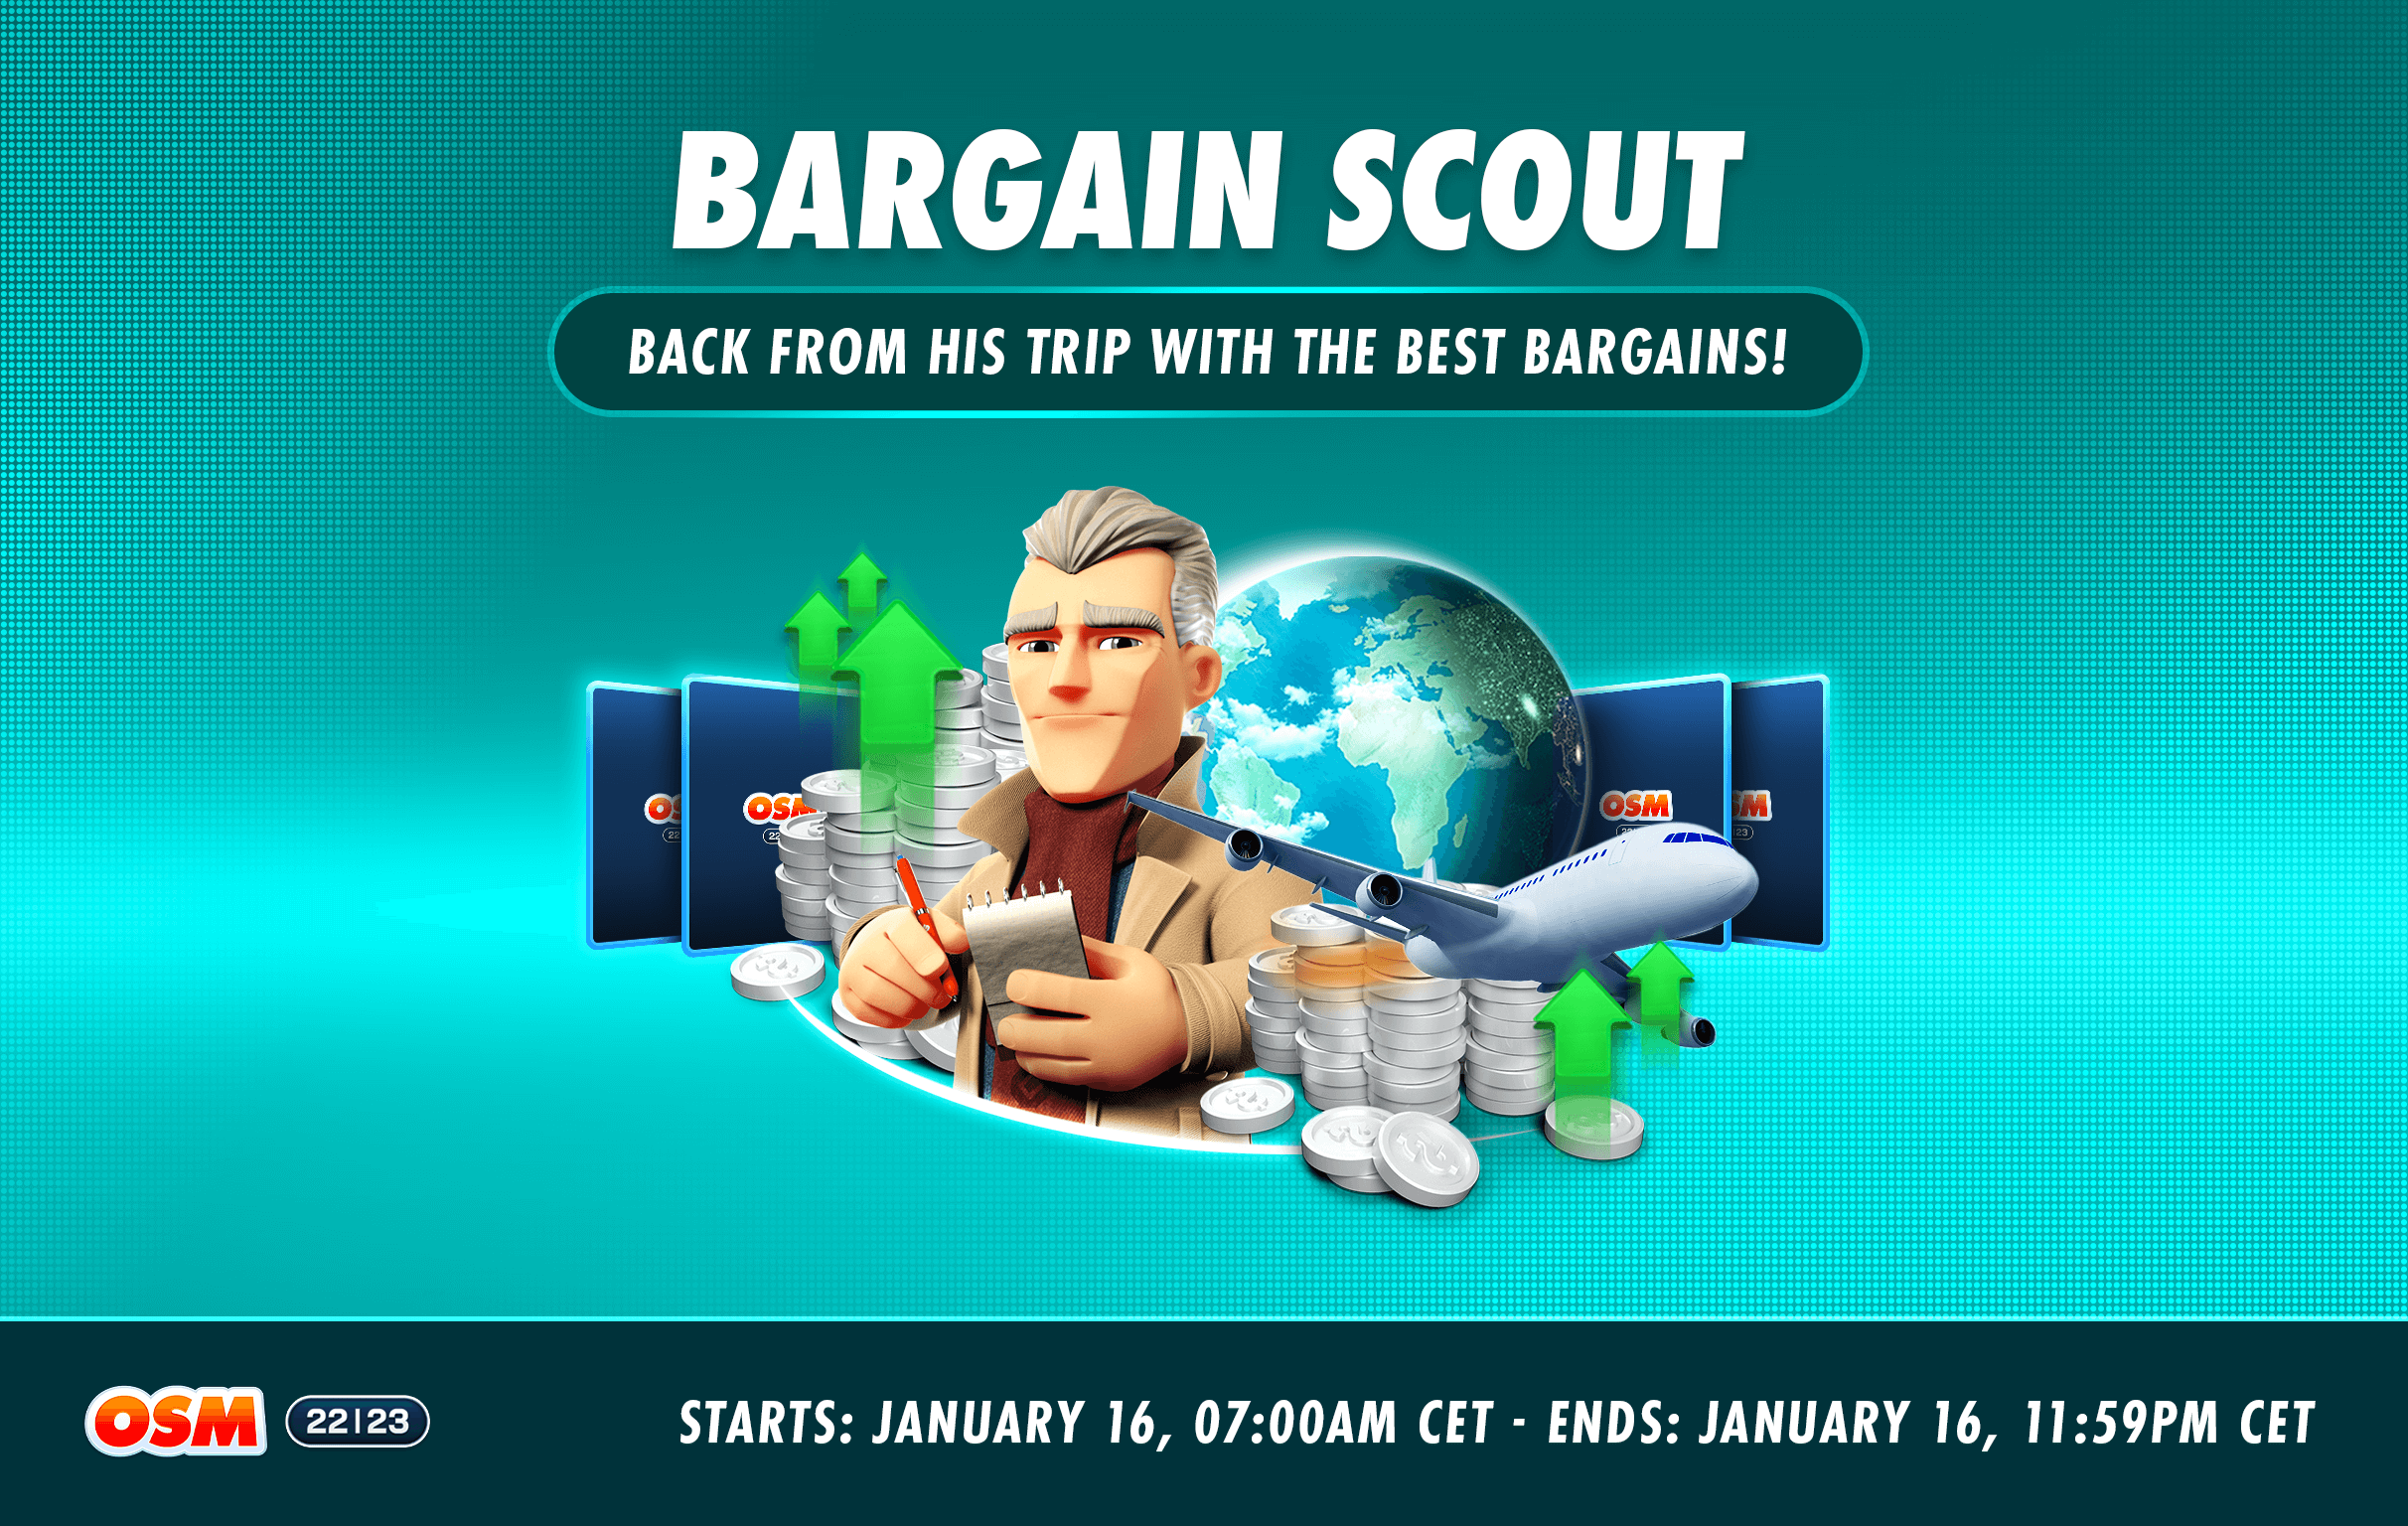 Forum_Bargain Scout_REDDIT (2).png